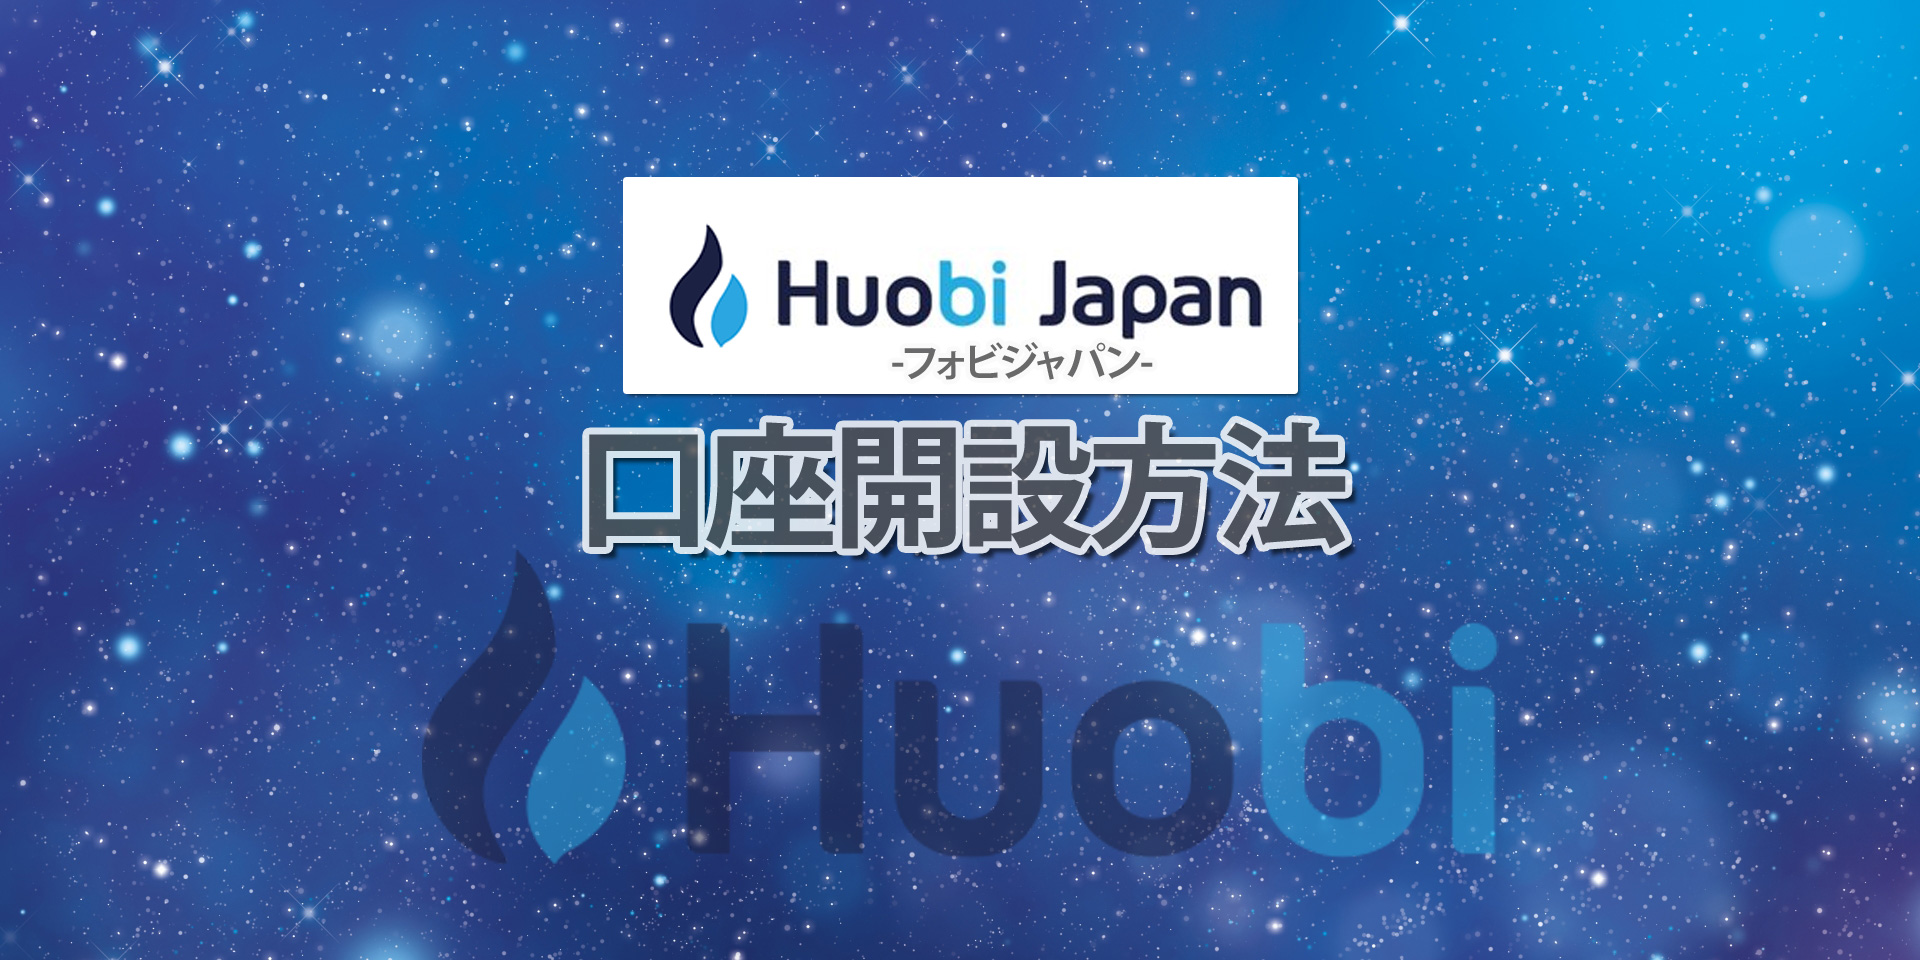 Huobi Japan フォビジャパン とは 取り扱い通貨や手数料など特徴を徹底解説 コインメディア Coin Media